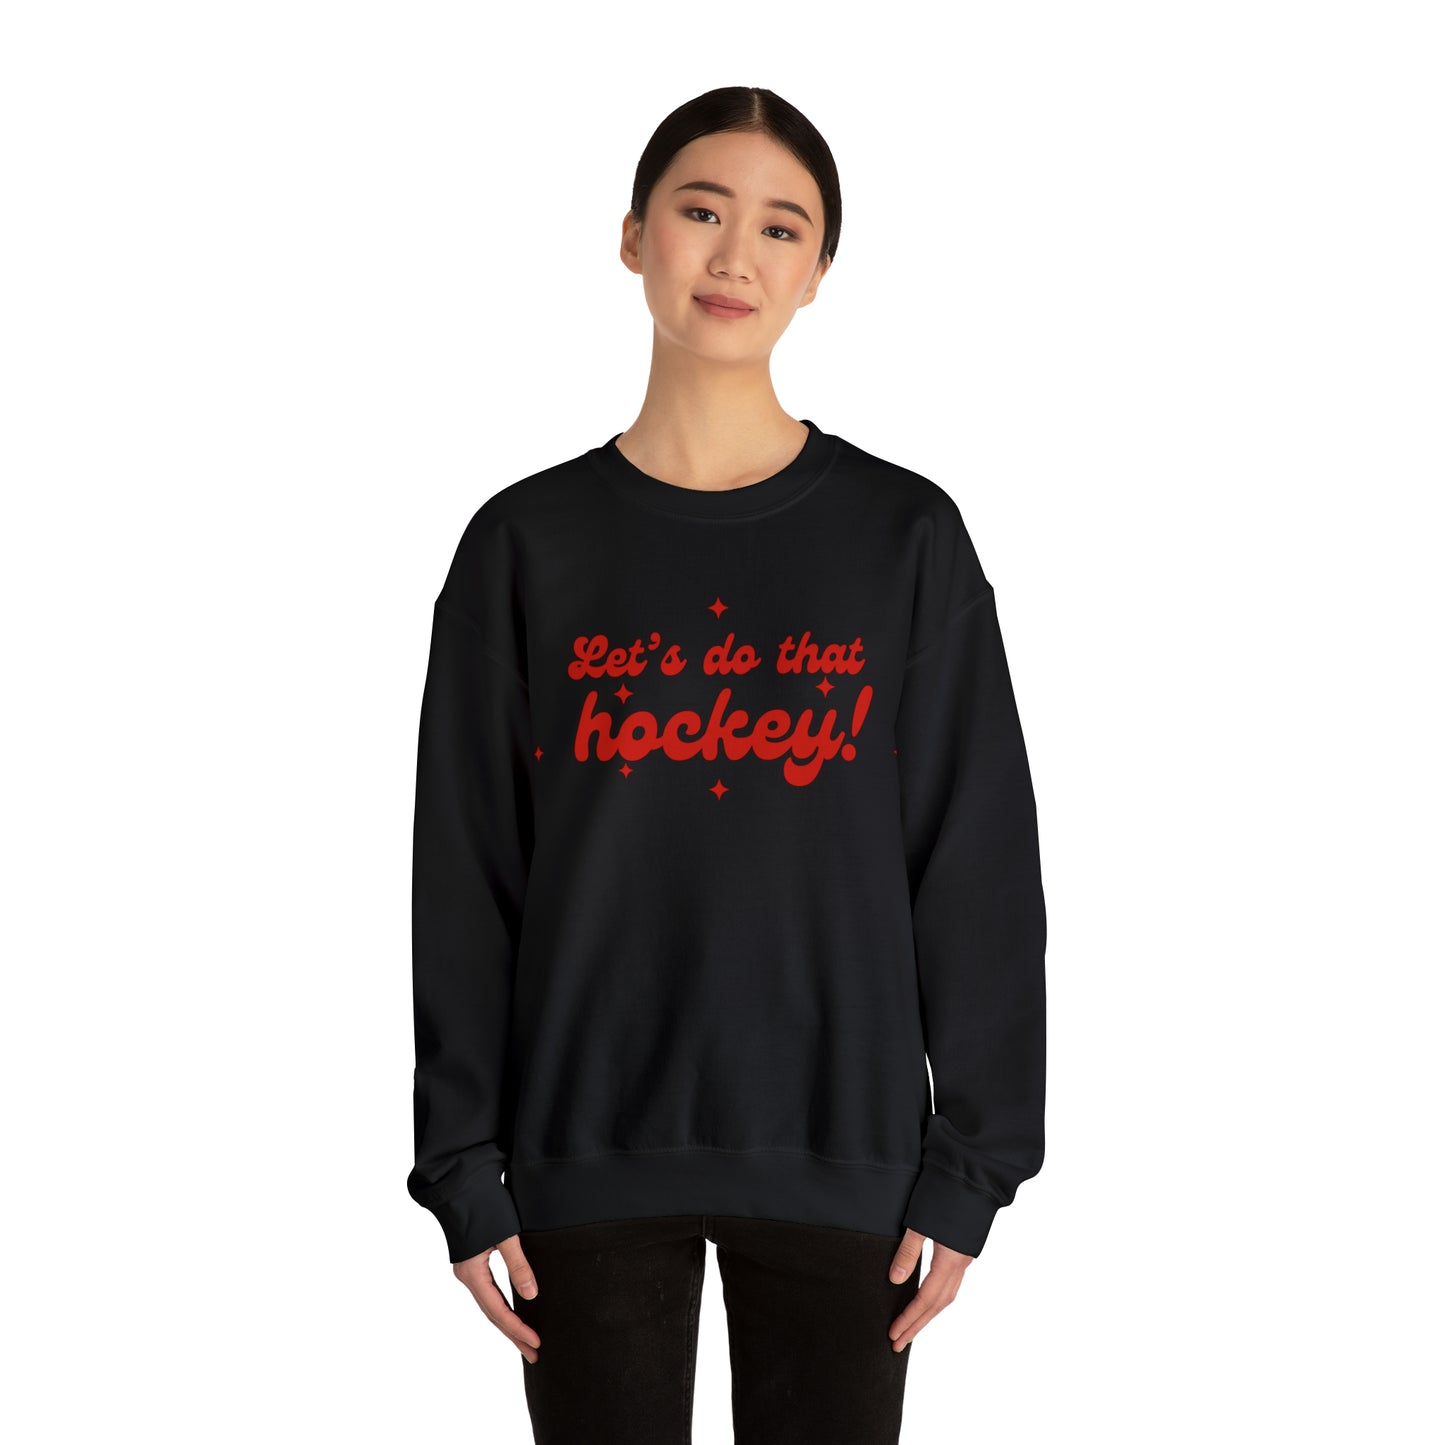 Let's do that hockey! Unisex Crewneck Sweatshirt